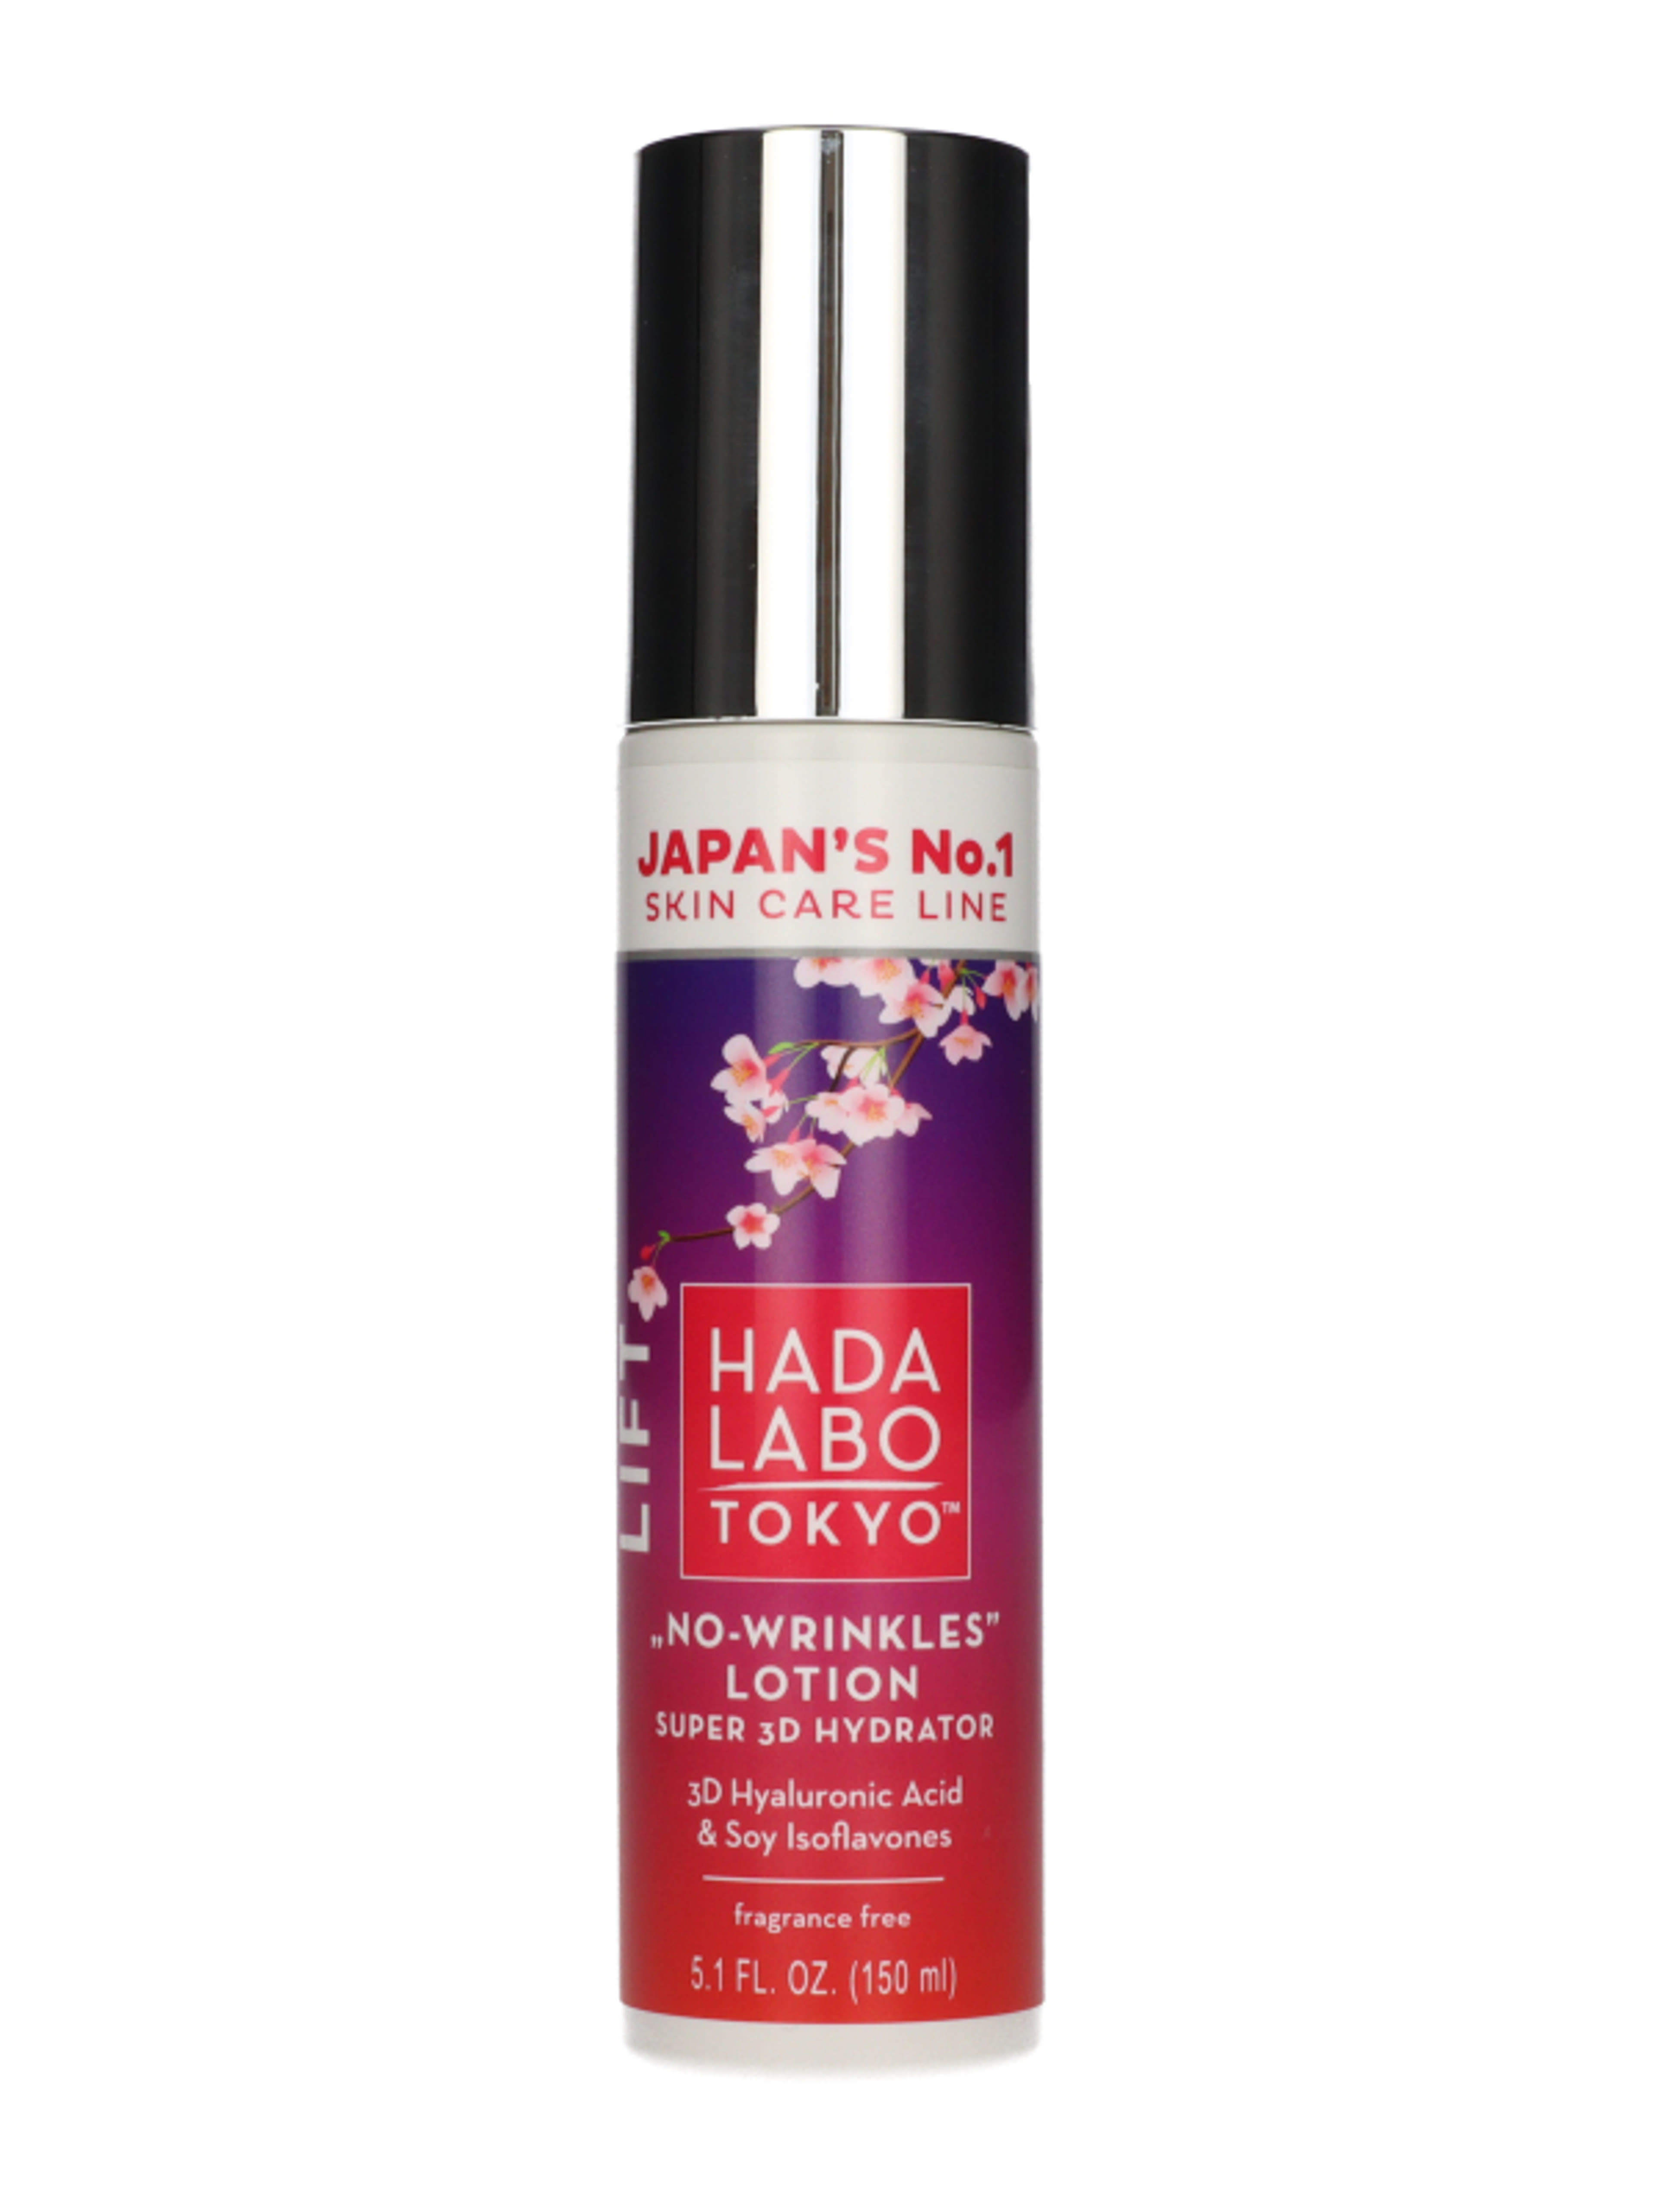 Hada Labo Tokyo Lift No-Wrinkles Lotion - 150 ml